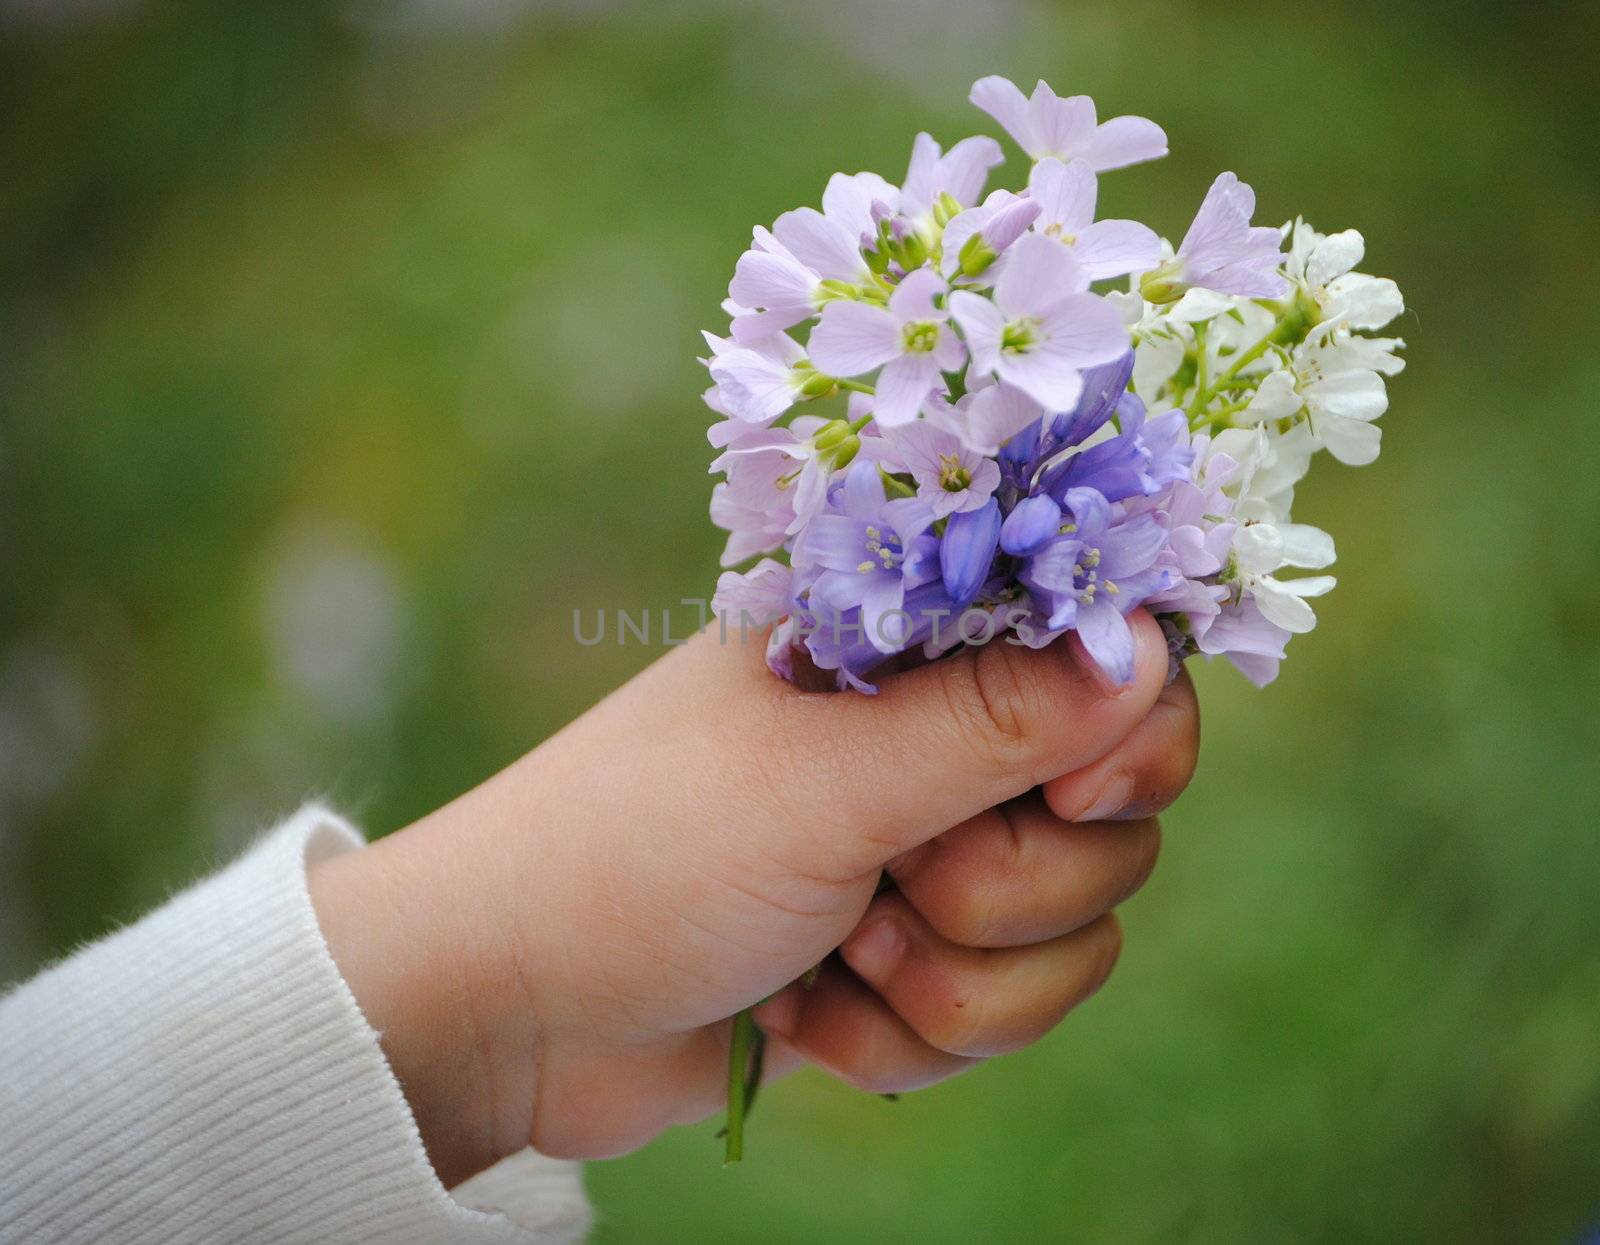 holding flowers by viviolsen